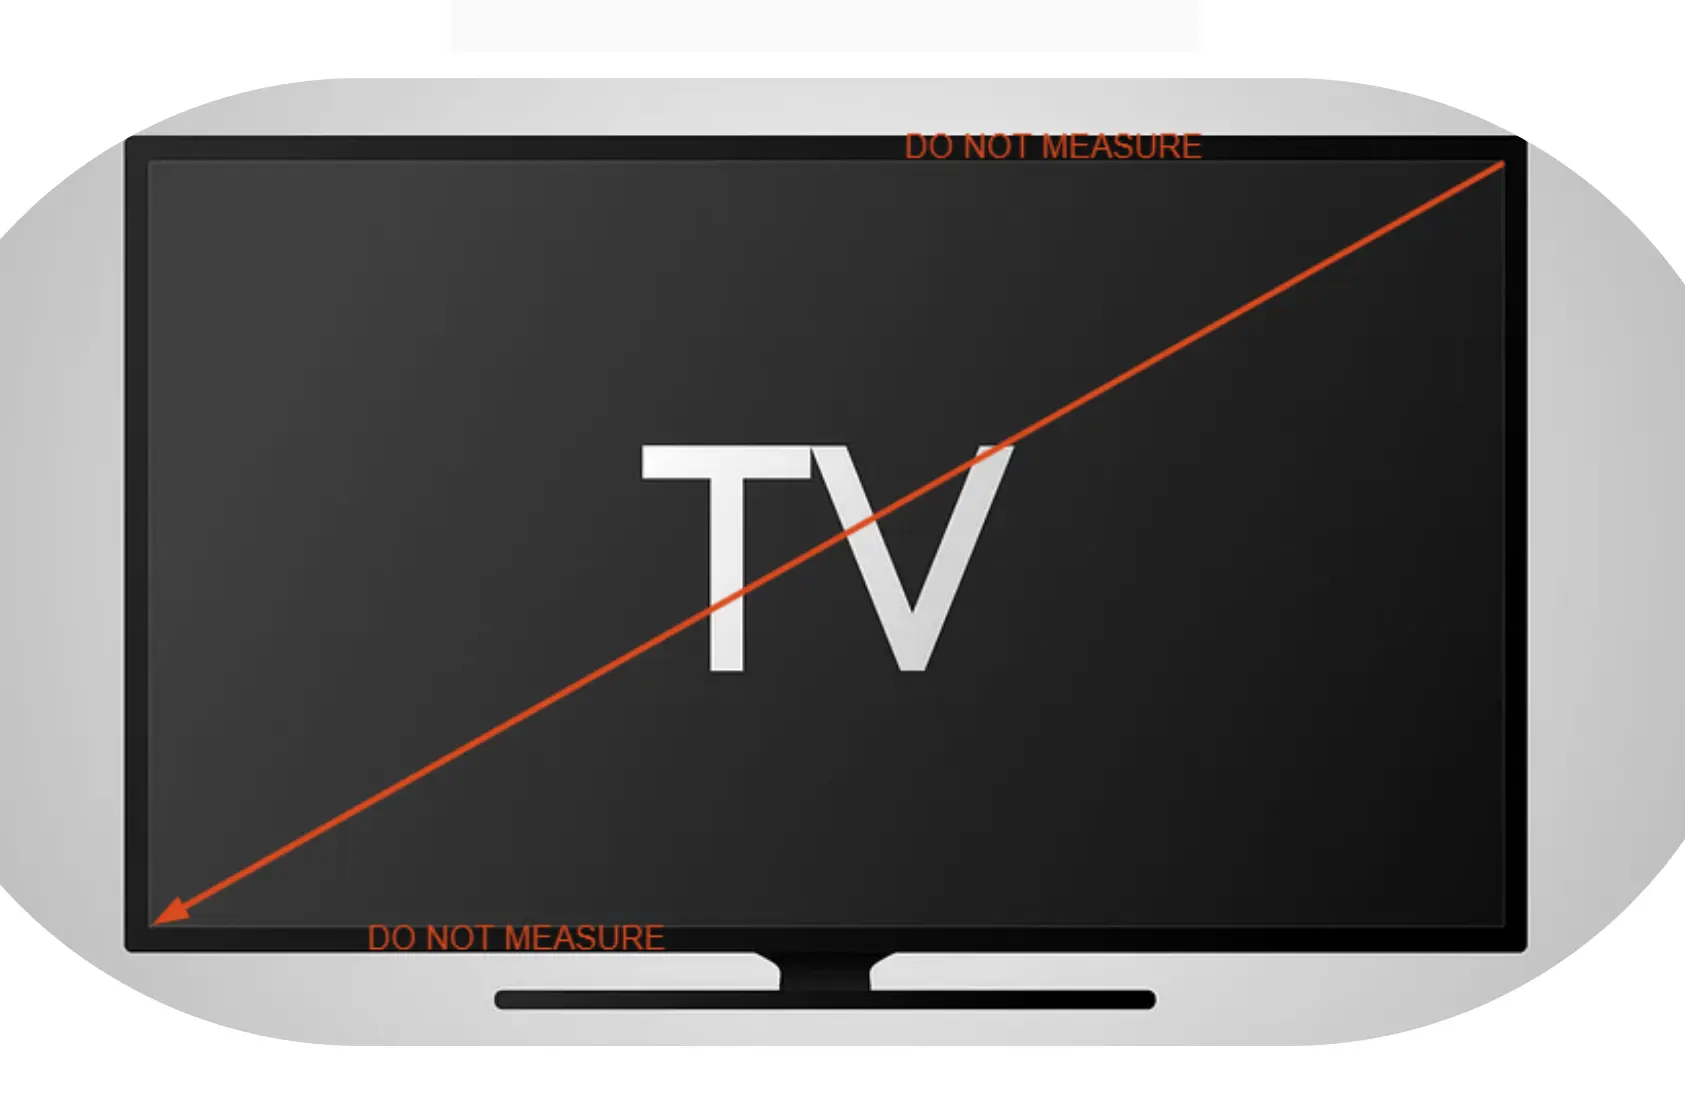 TV measurment